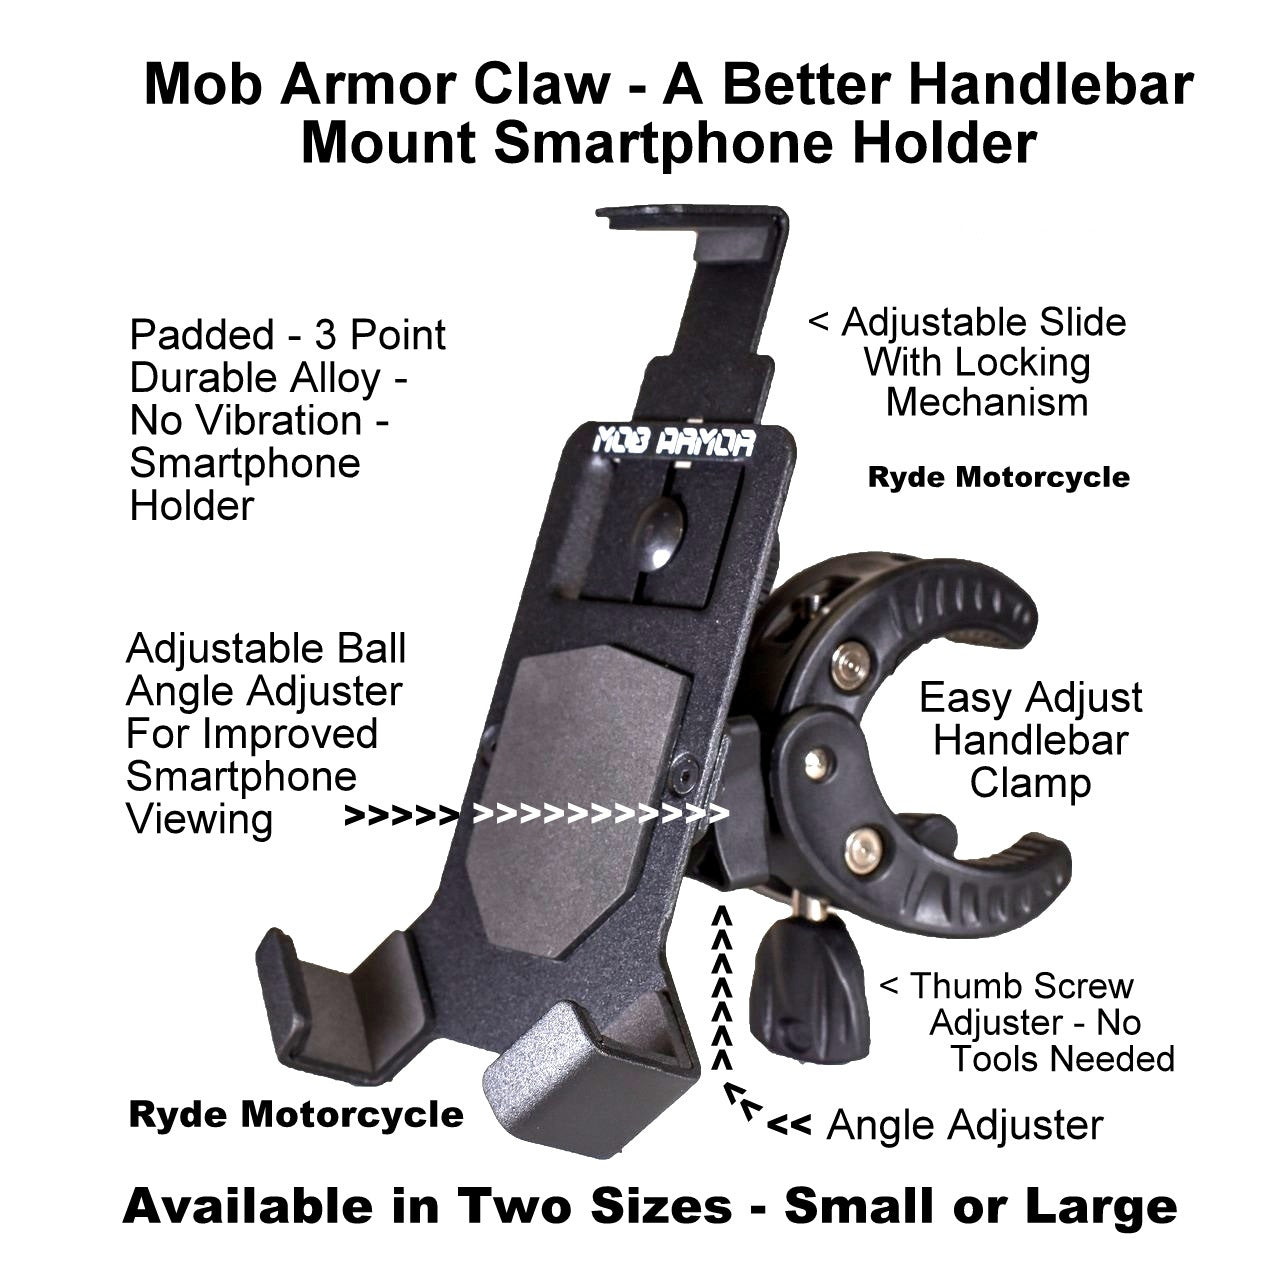 Mob Armor Claw Handlebar Mount Smartphone Holder